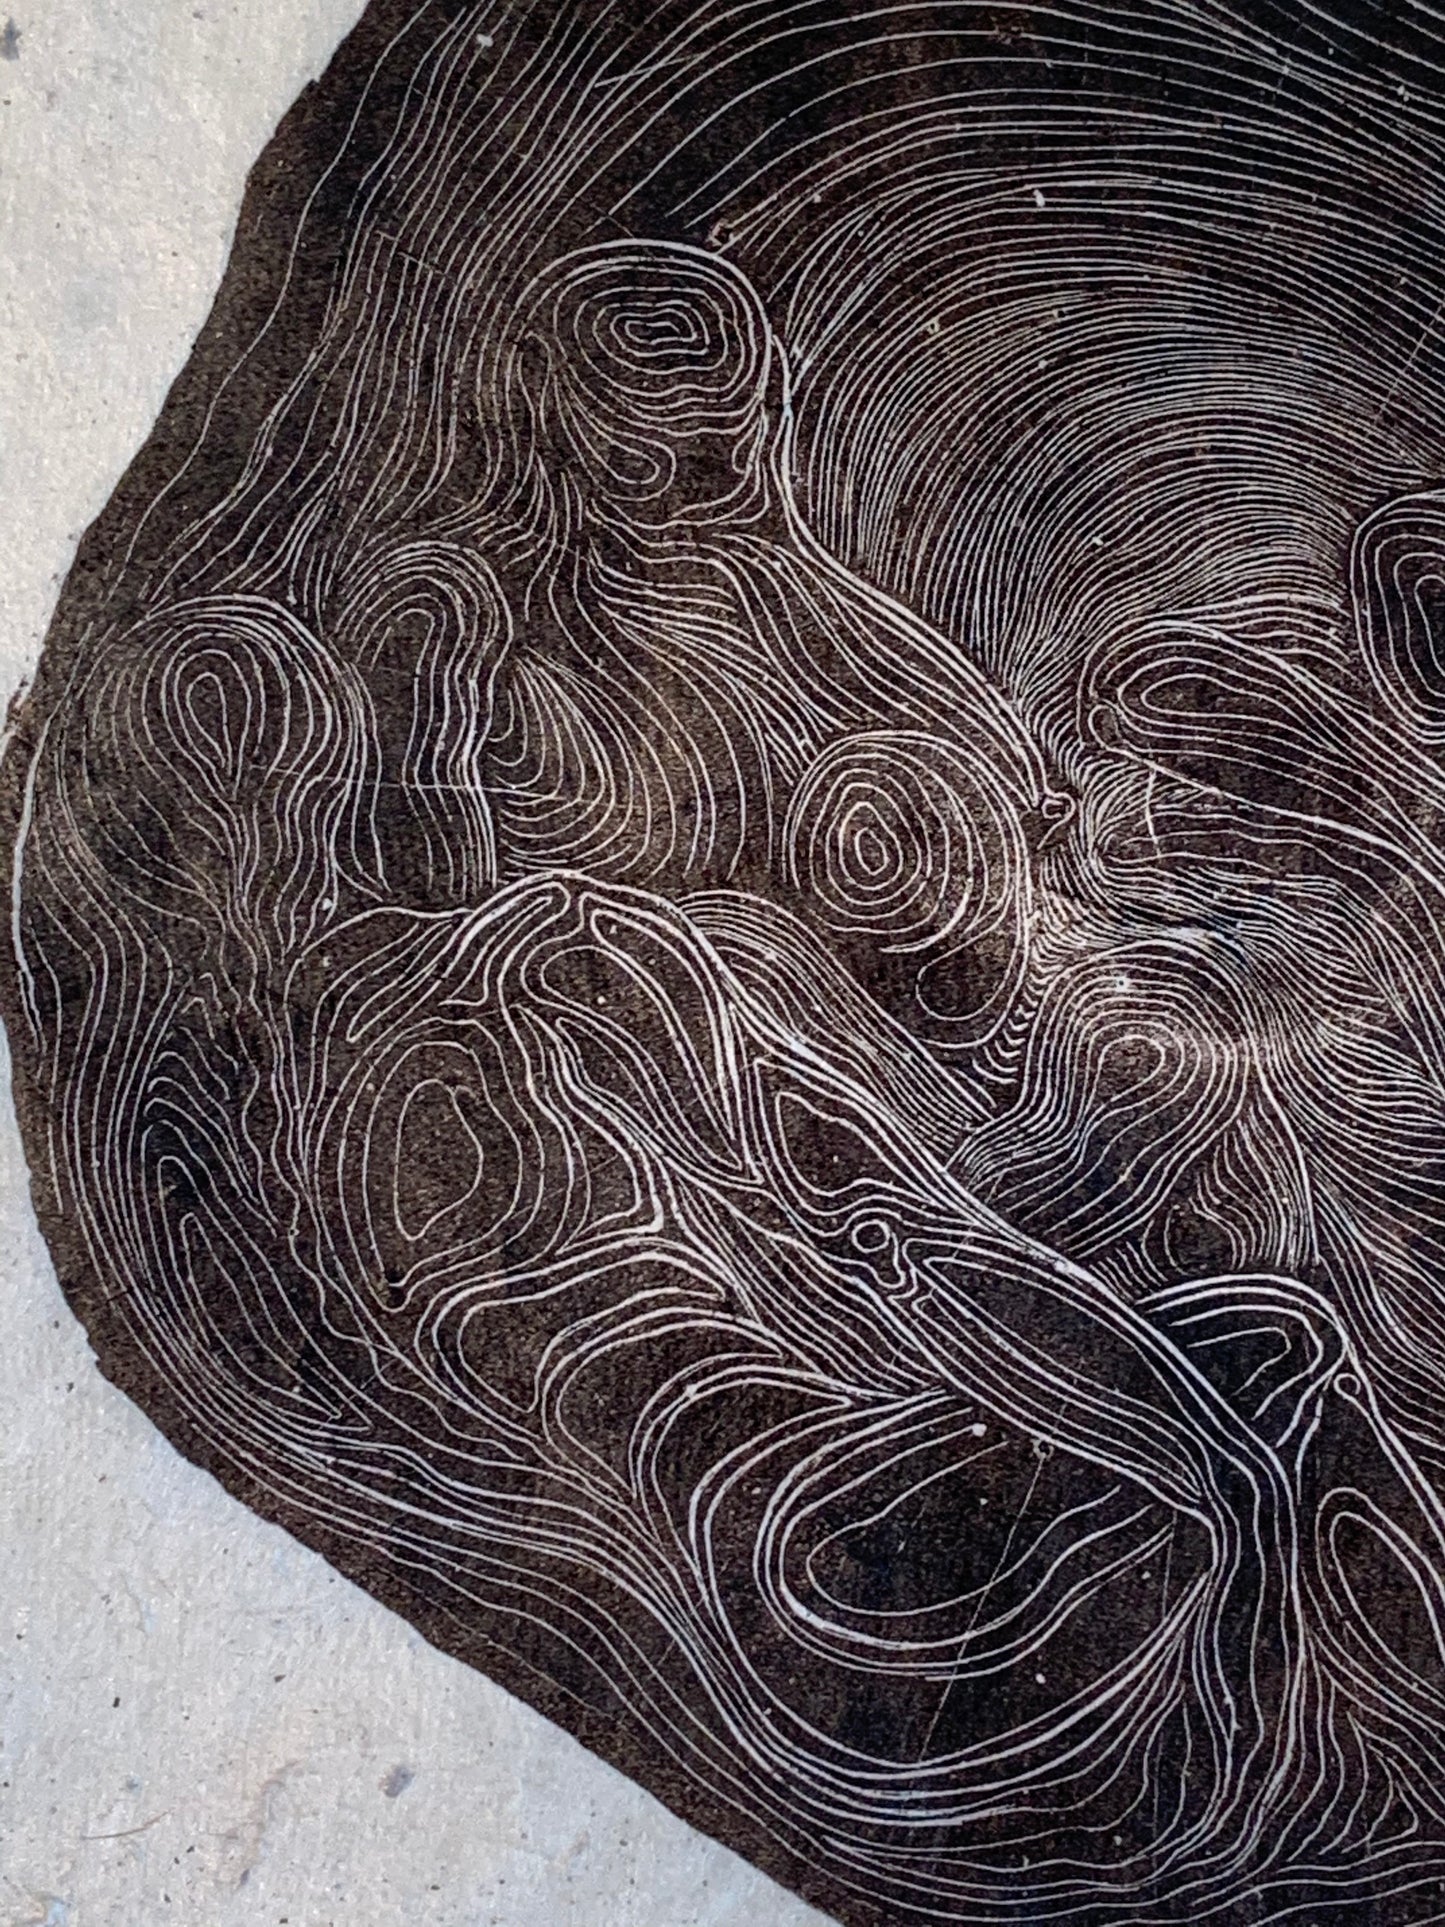 Winter Sleeping Hibernation Figures Life of Tree Rings Original Wood Engraving